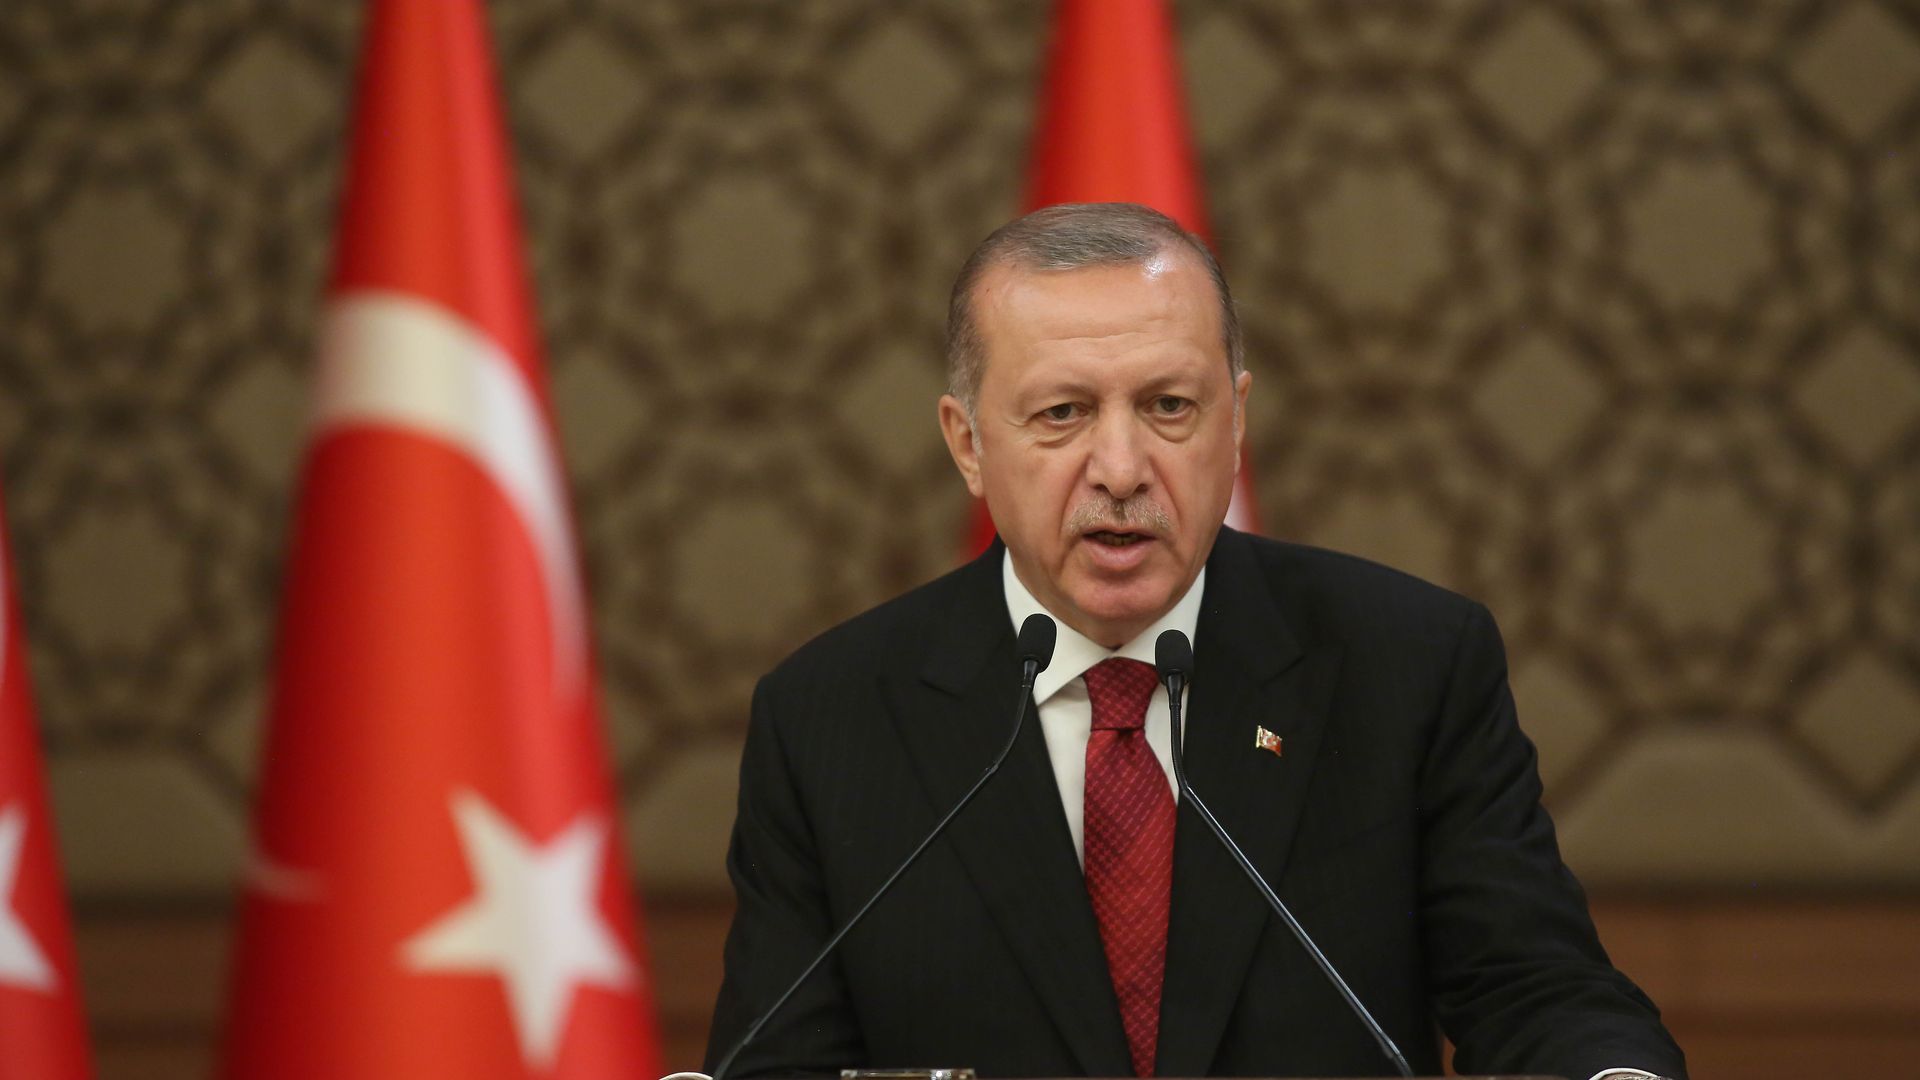 Turkey's President Erdogan giving a speech